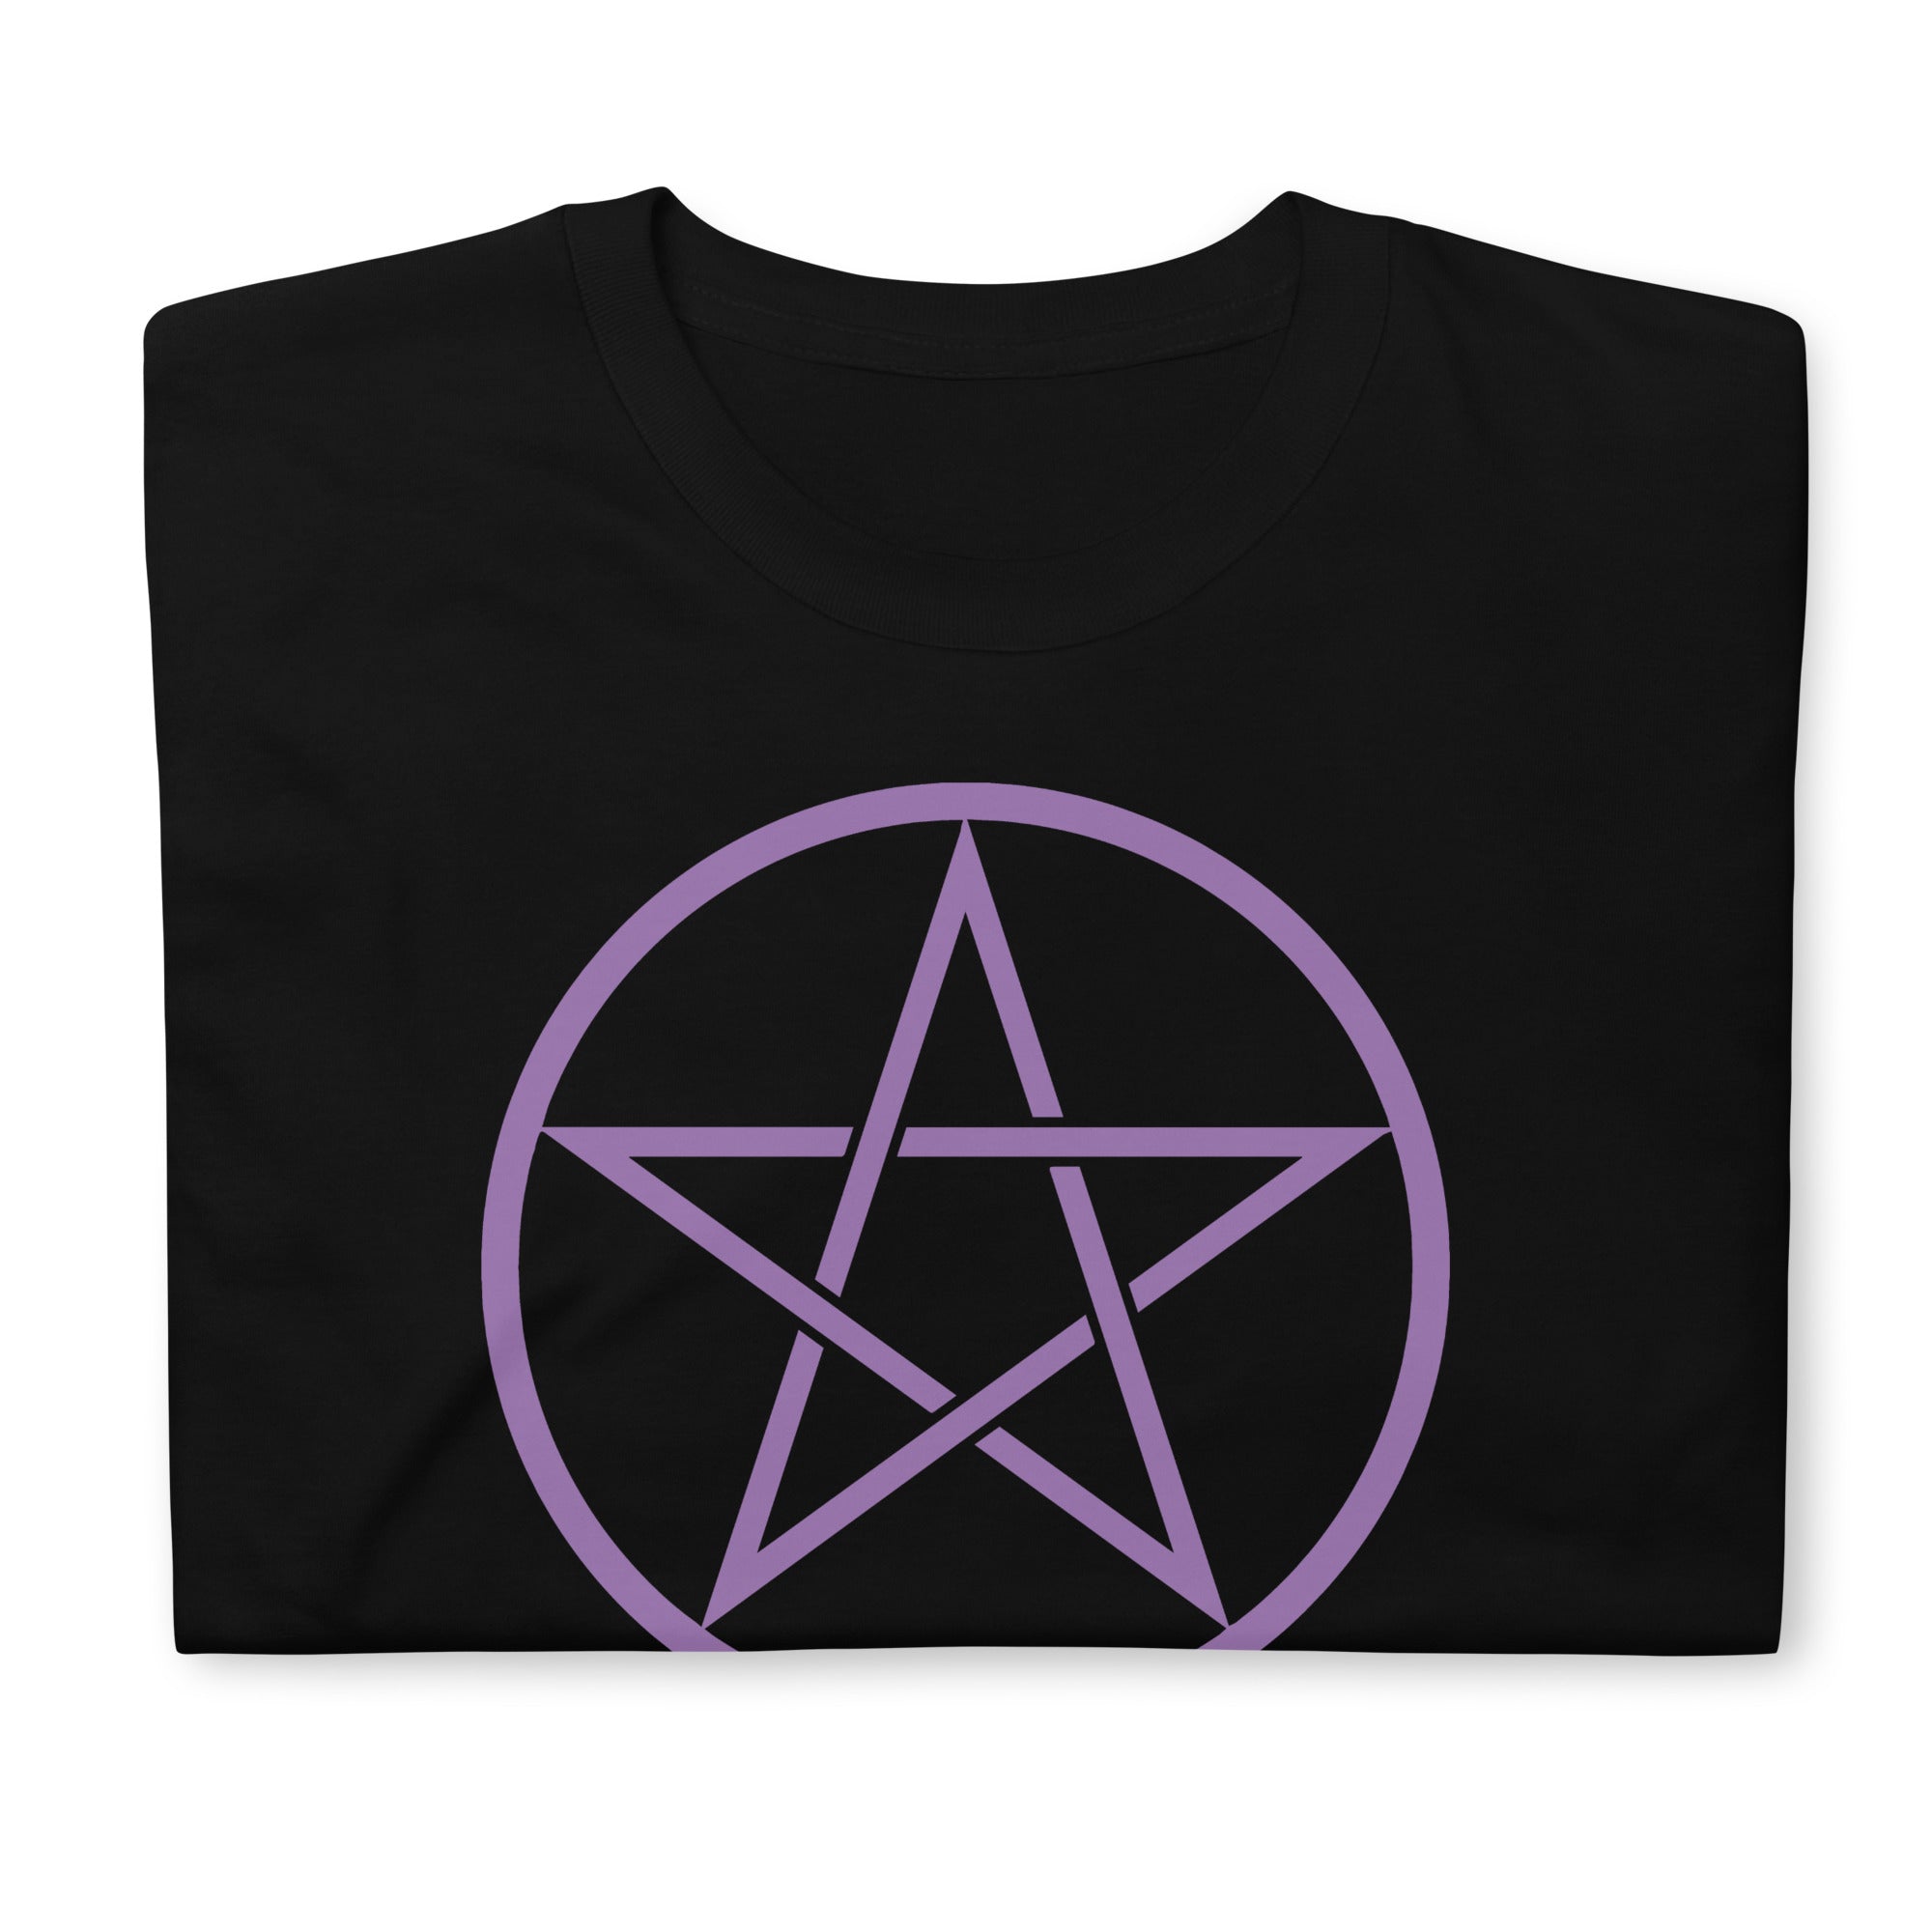 Purple Goth Wiccan Woven Pentagram Men's Short-Sleeve T-Shirt - Edge of Life Designs